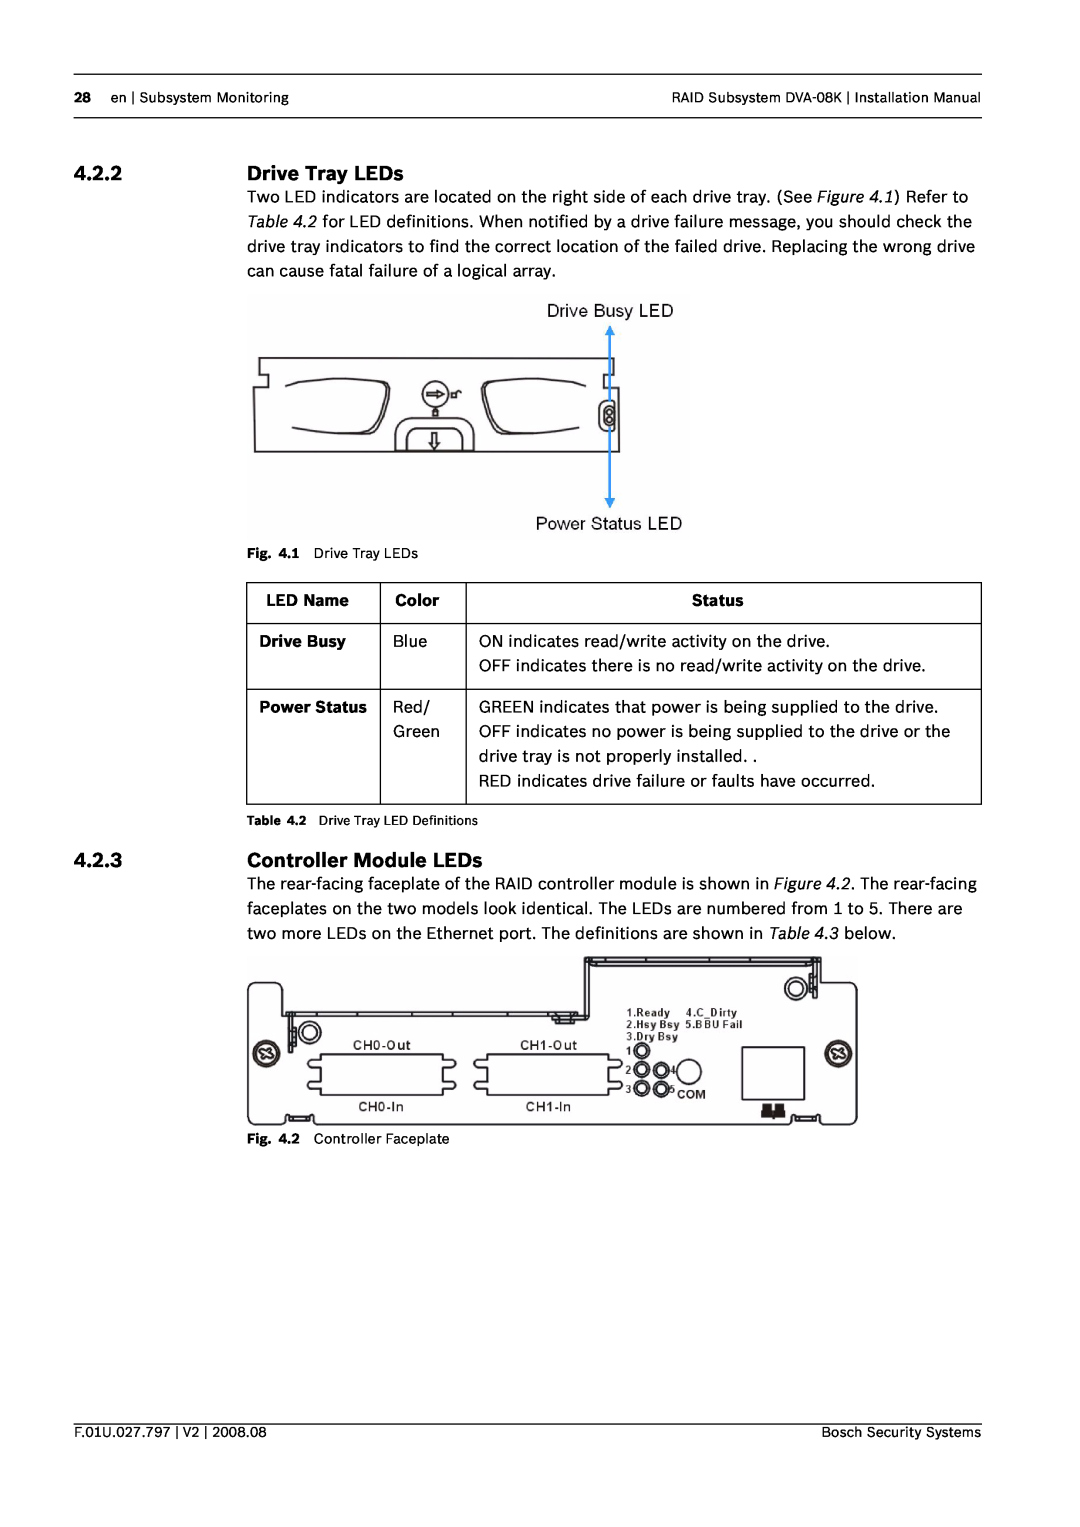 Bosch Appliances DVA-08K manual 4.2.2Drive Tray LEDs, 4.2.3, Controller Module LEDs, LED Name, Color, Status, Drive Busy 